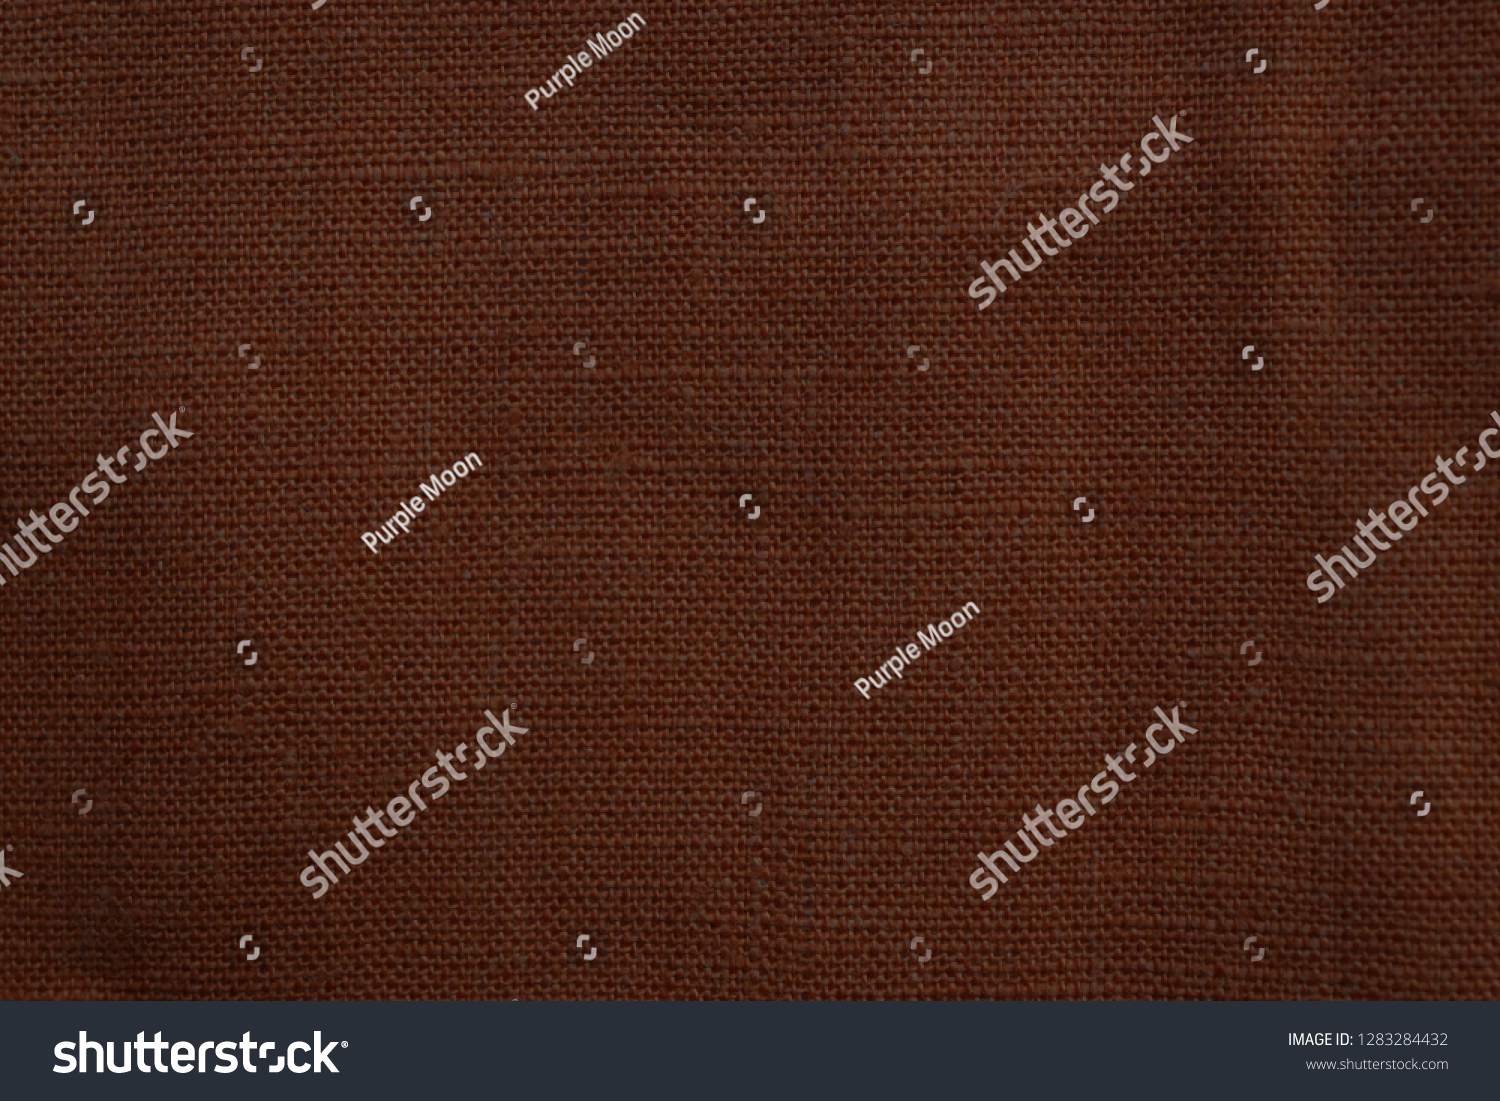 Brown Linen Fabric Texture Background Stock Photo 1283284432 Shutterstock